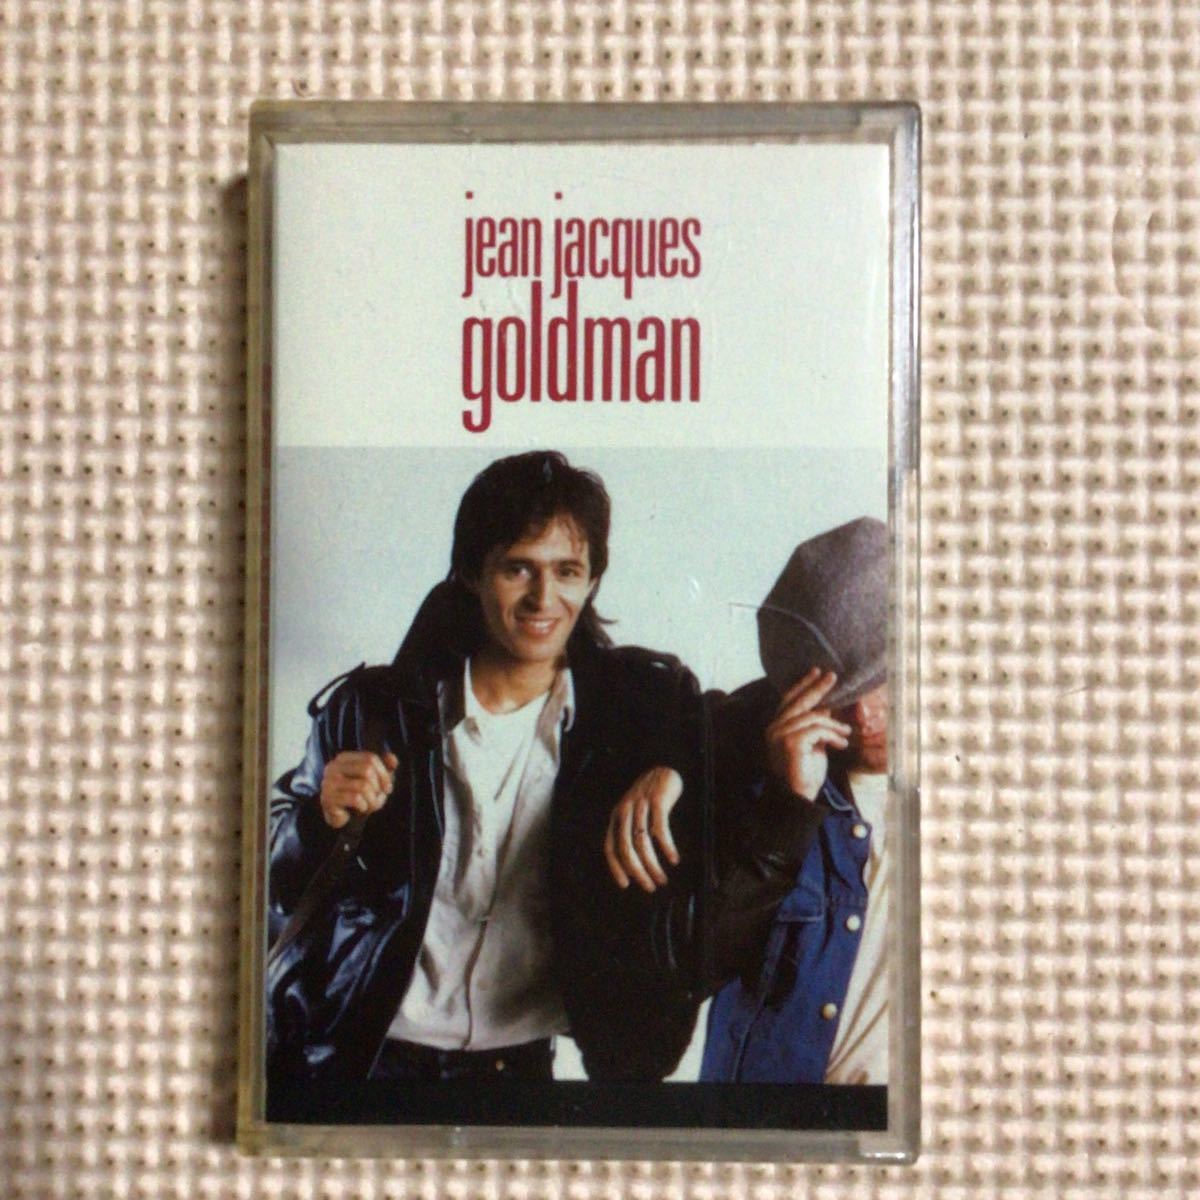  Jean = Jack * Gold man [ Франция ] NOH HOMOLOGUS Голландия запись кассетная лента 